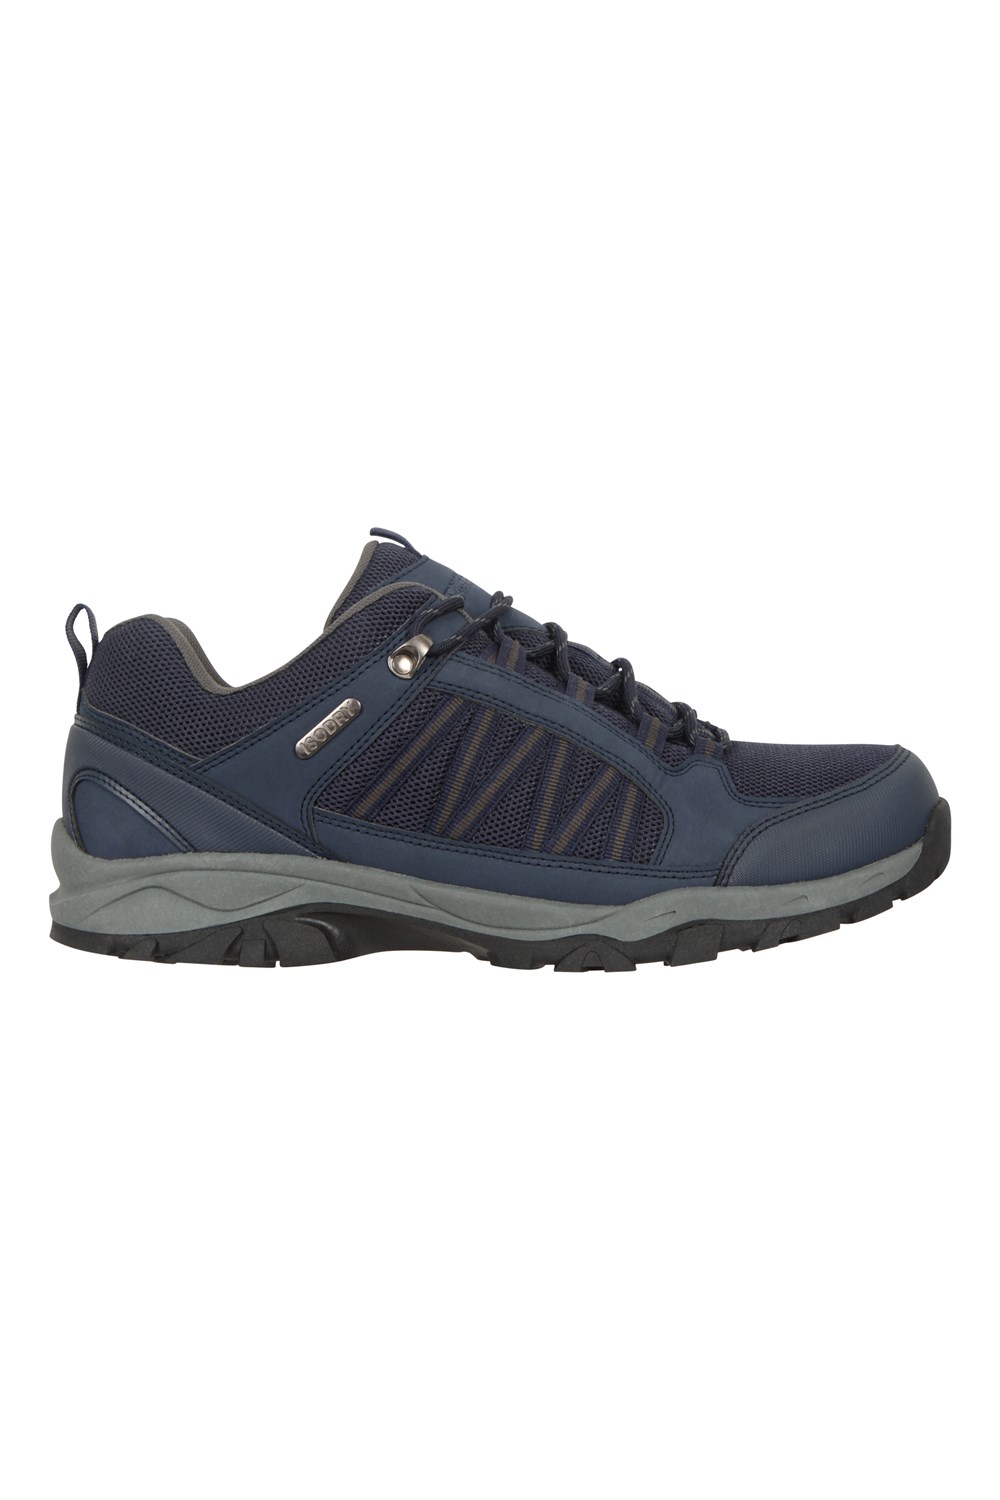 Mountain Warehouse Path Men's Walking Shoes Breathable Waterproof Gym ...